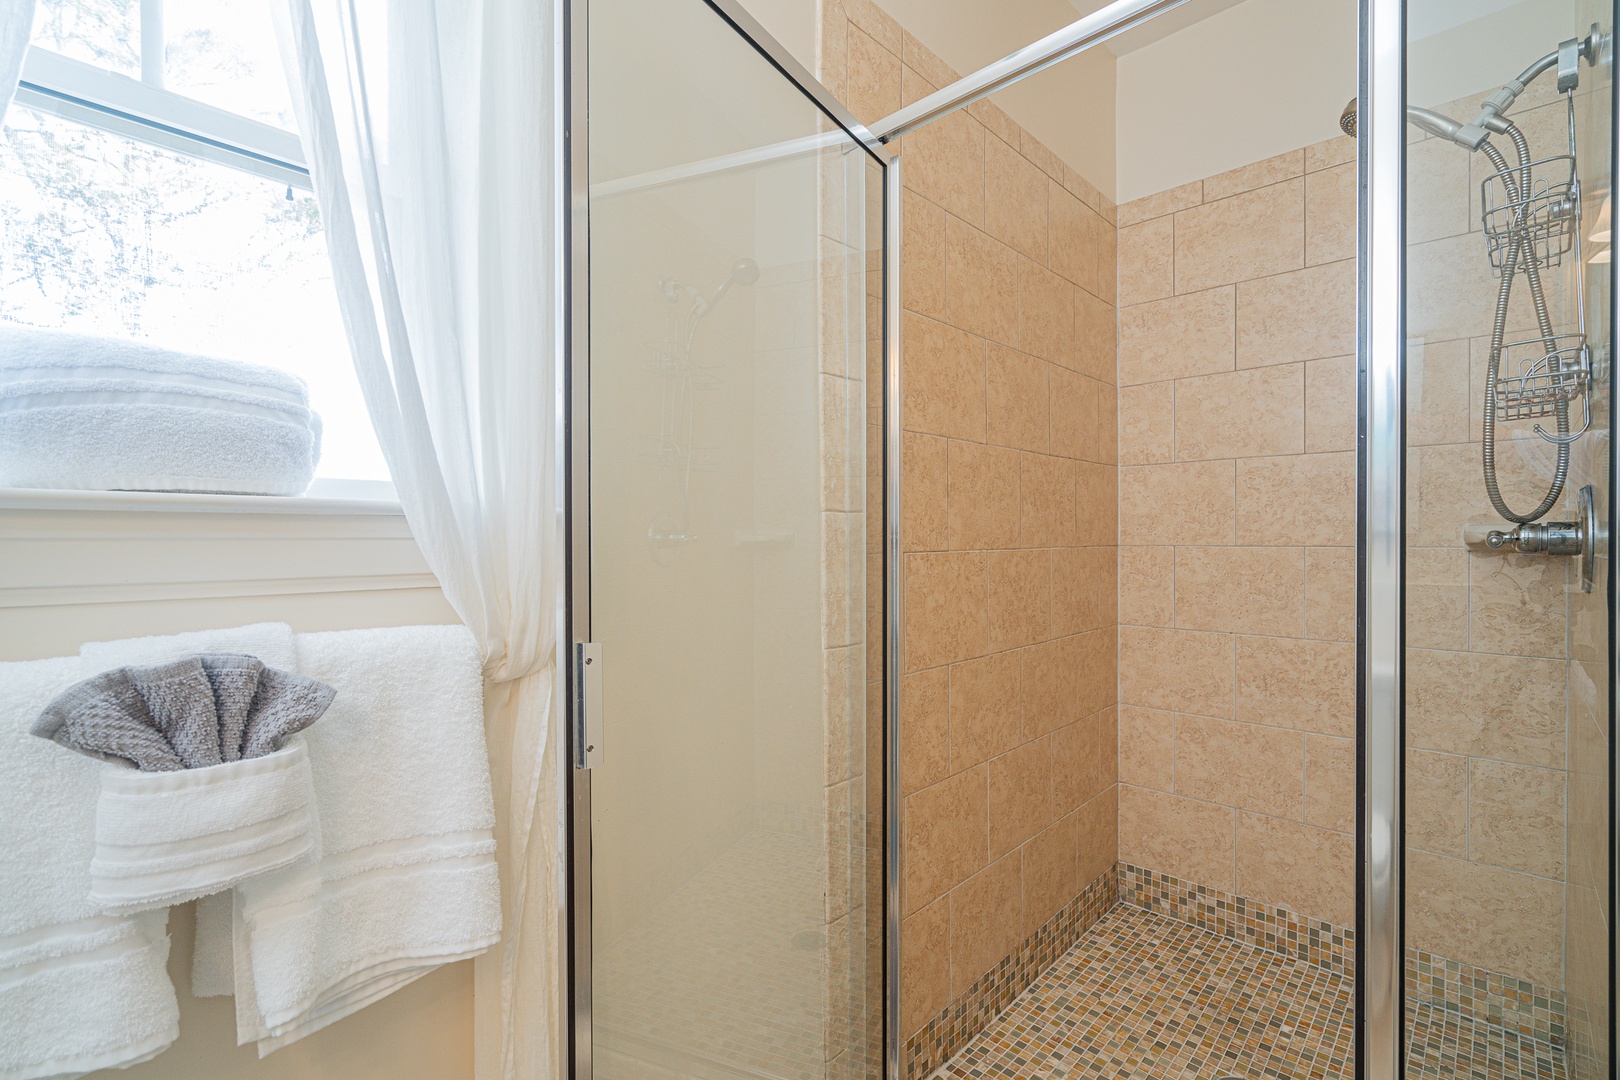 This 2nd floor ensuite bath offers a pedestal sink & glass shower